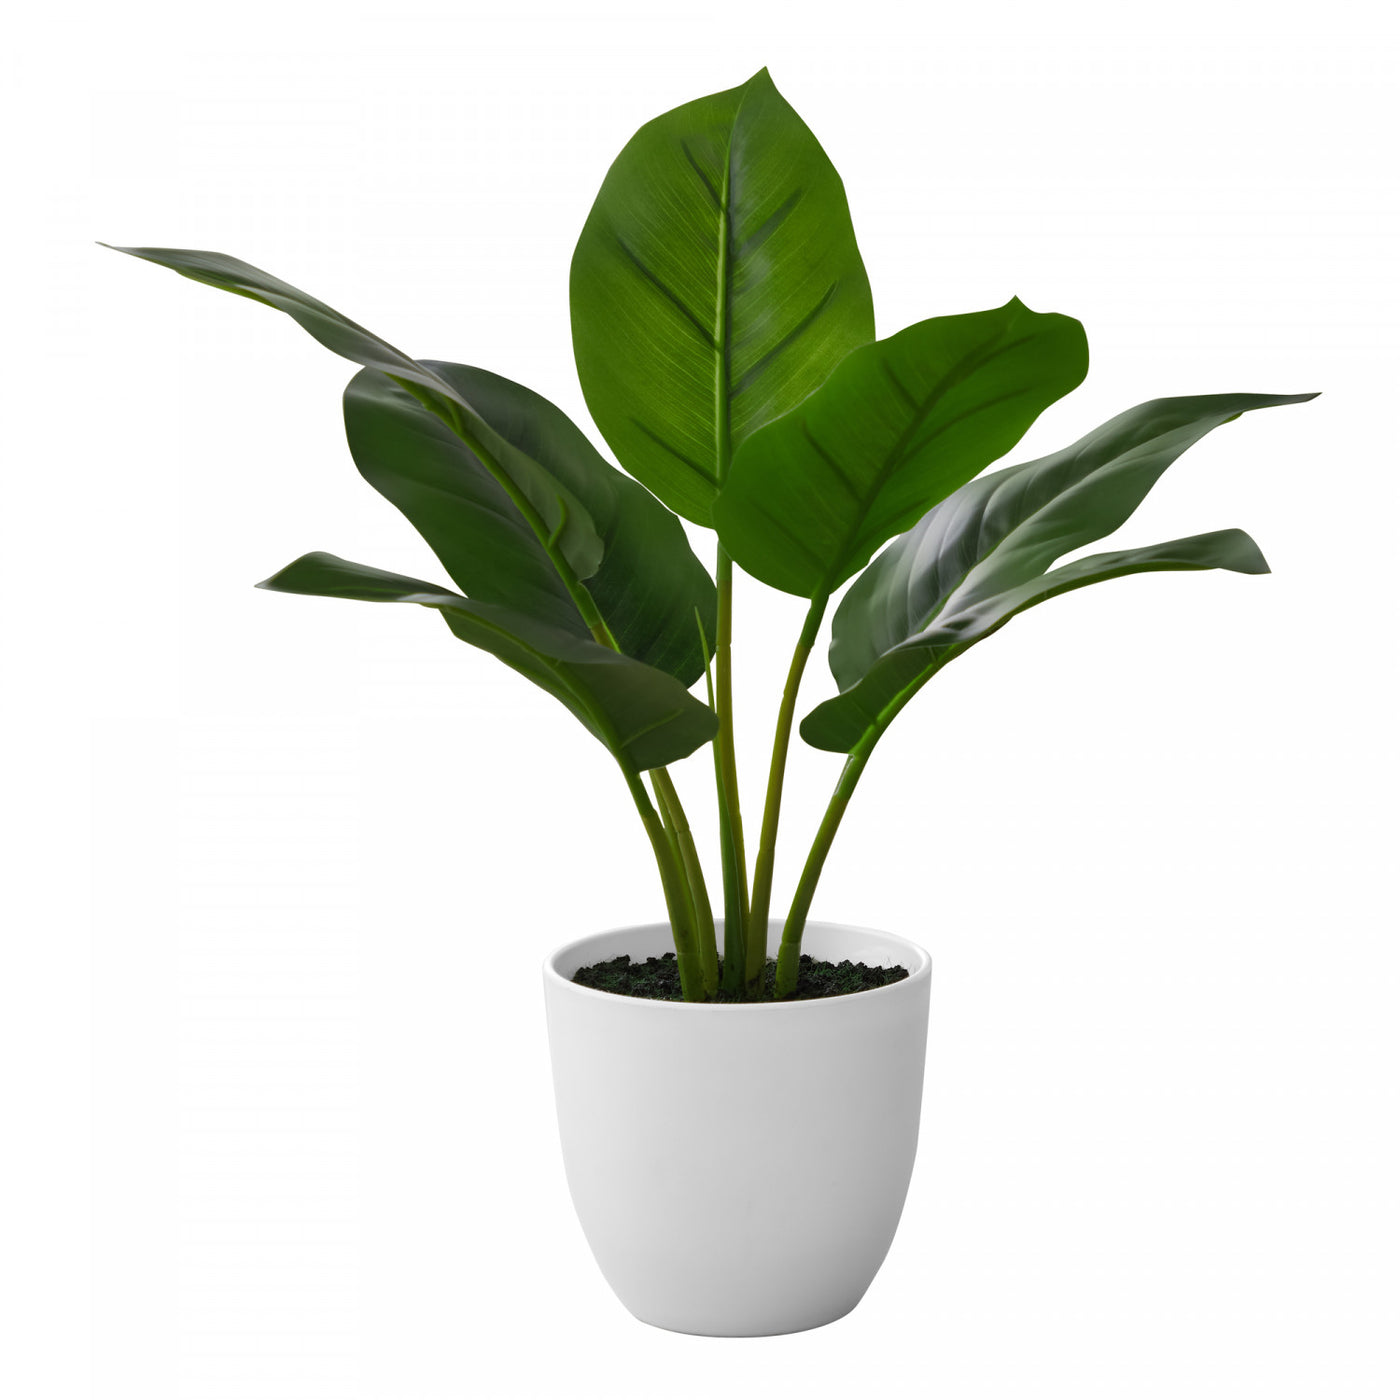 Plante Verte Artificielle, Bananier Tropical En Plastique, Grande